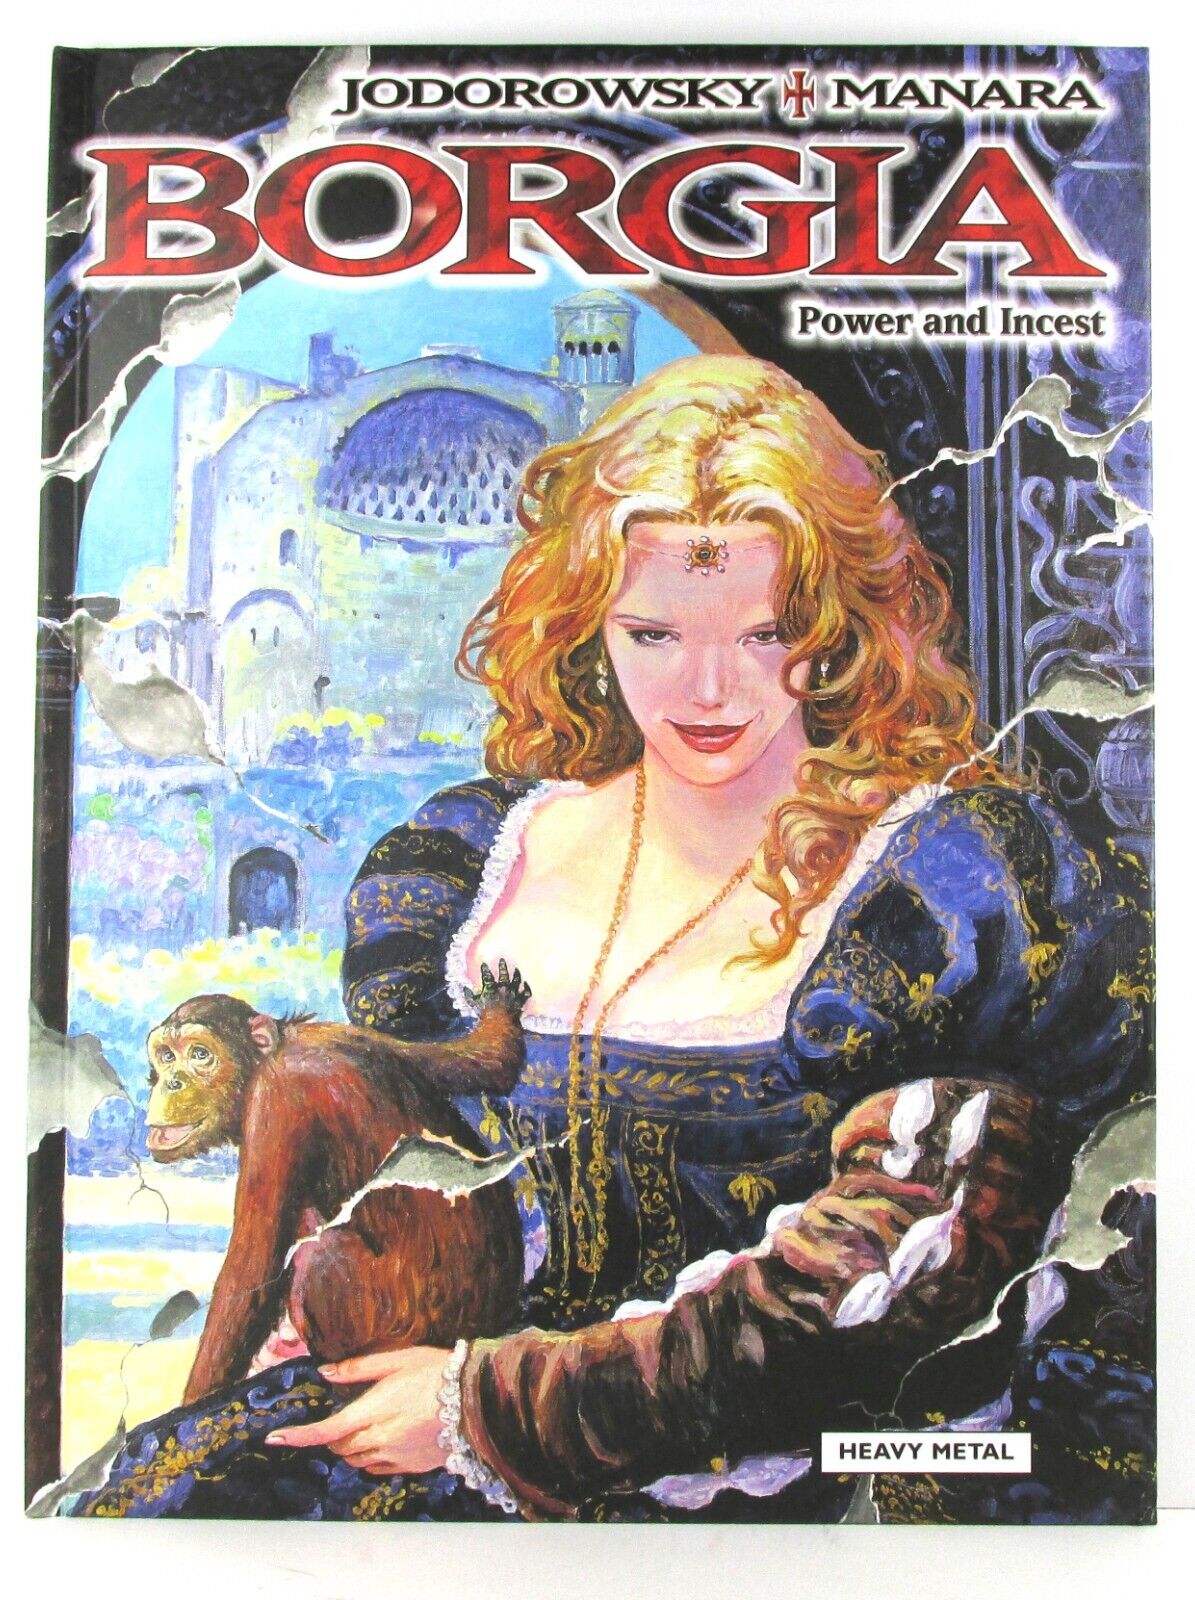 Borgia #2 * Power and Incest * Jodorowsky & Manara * Hardback